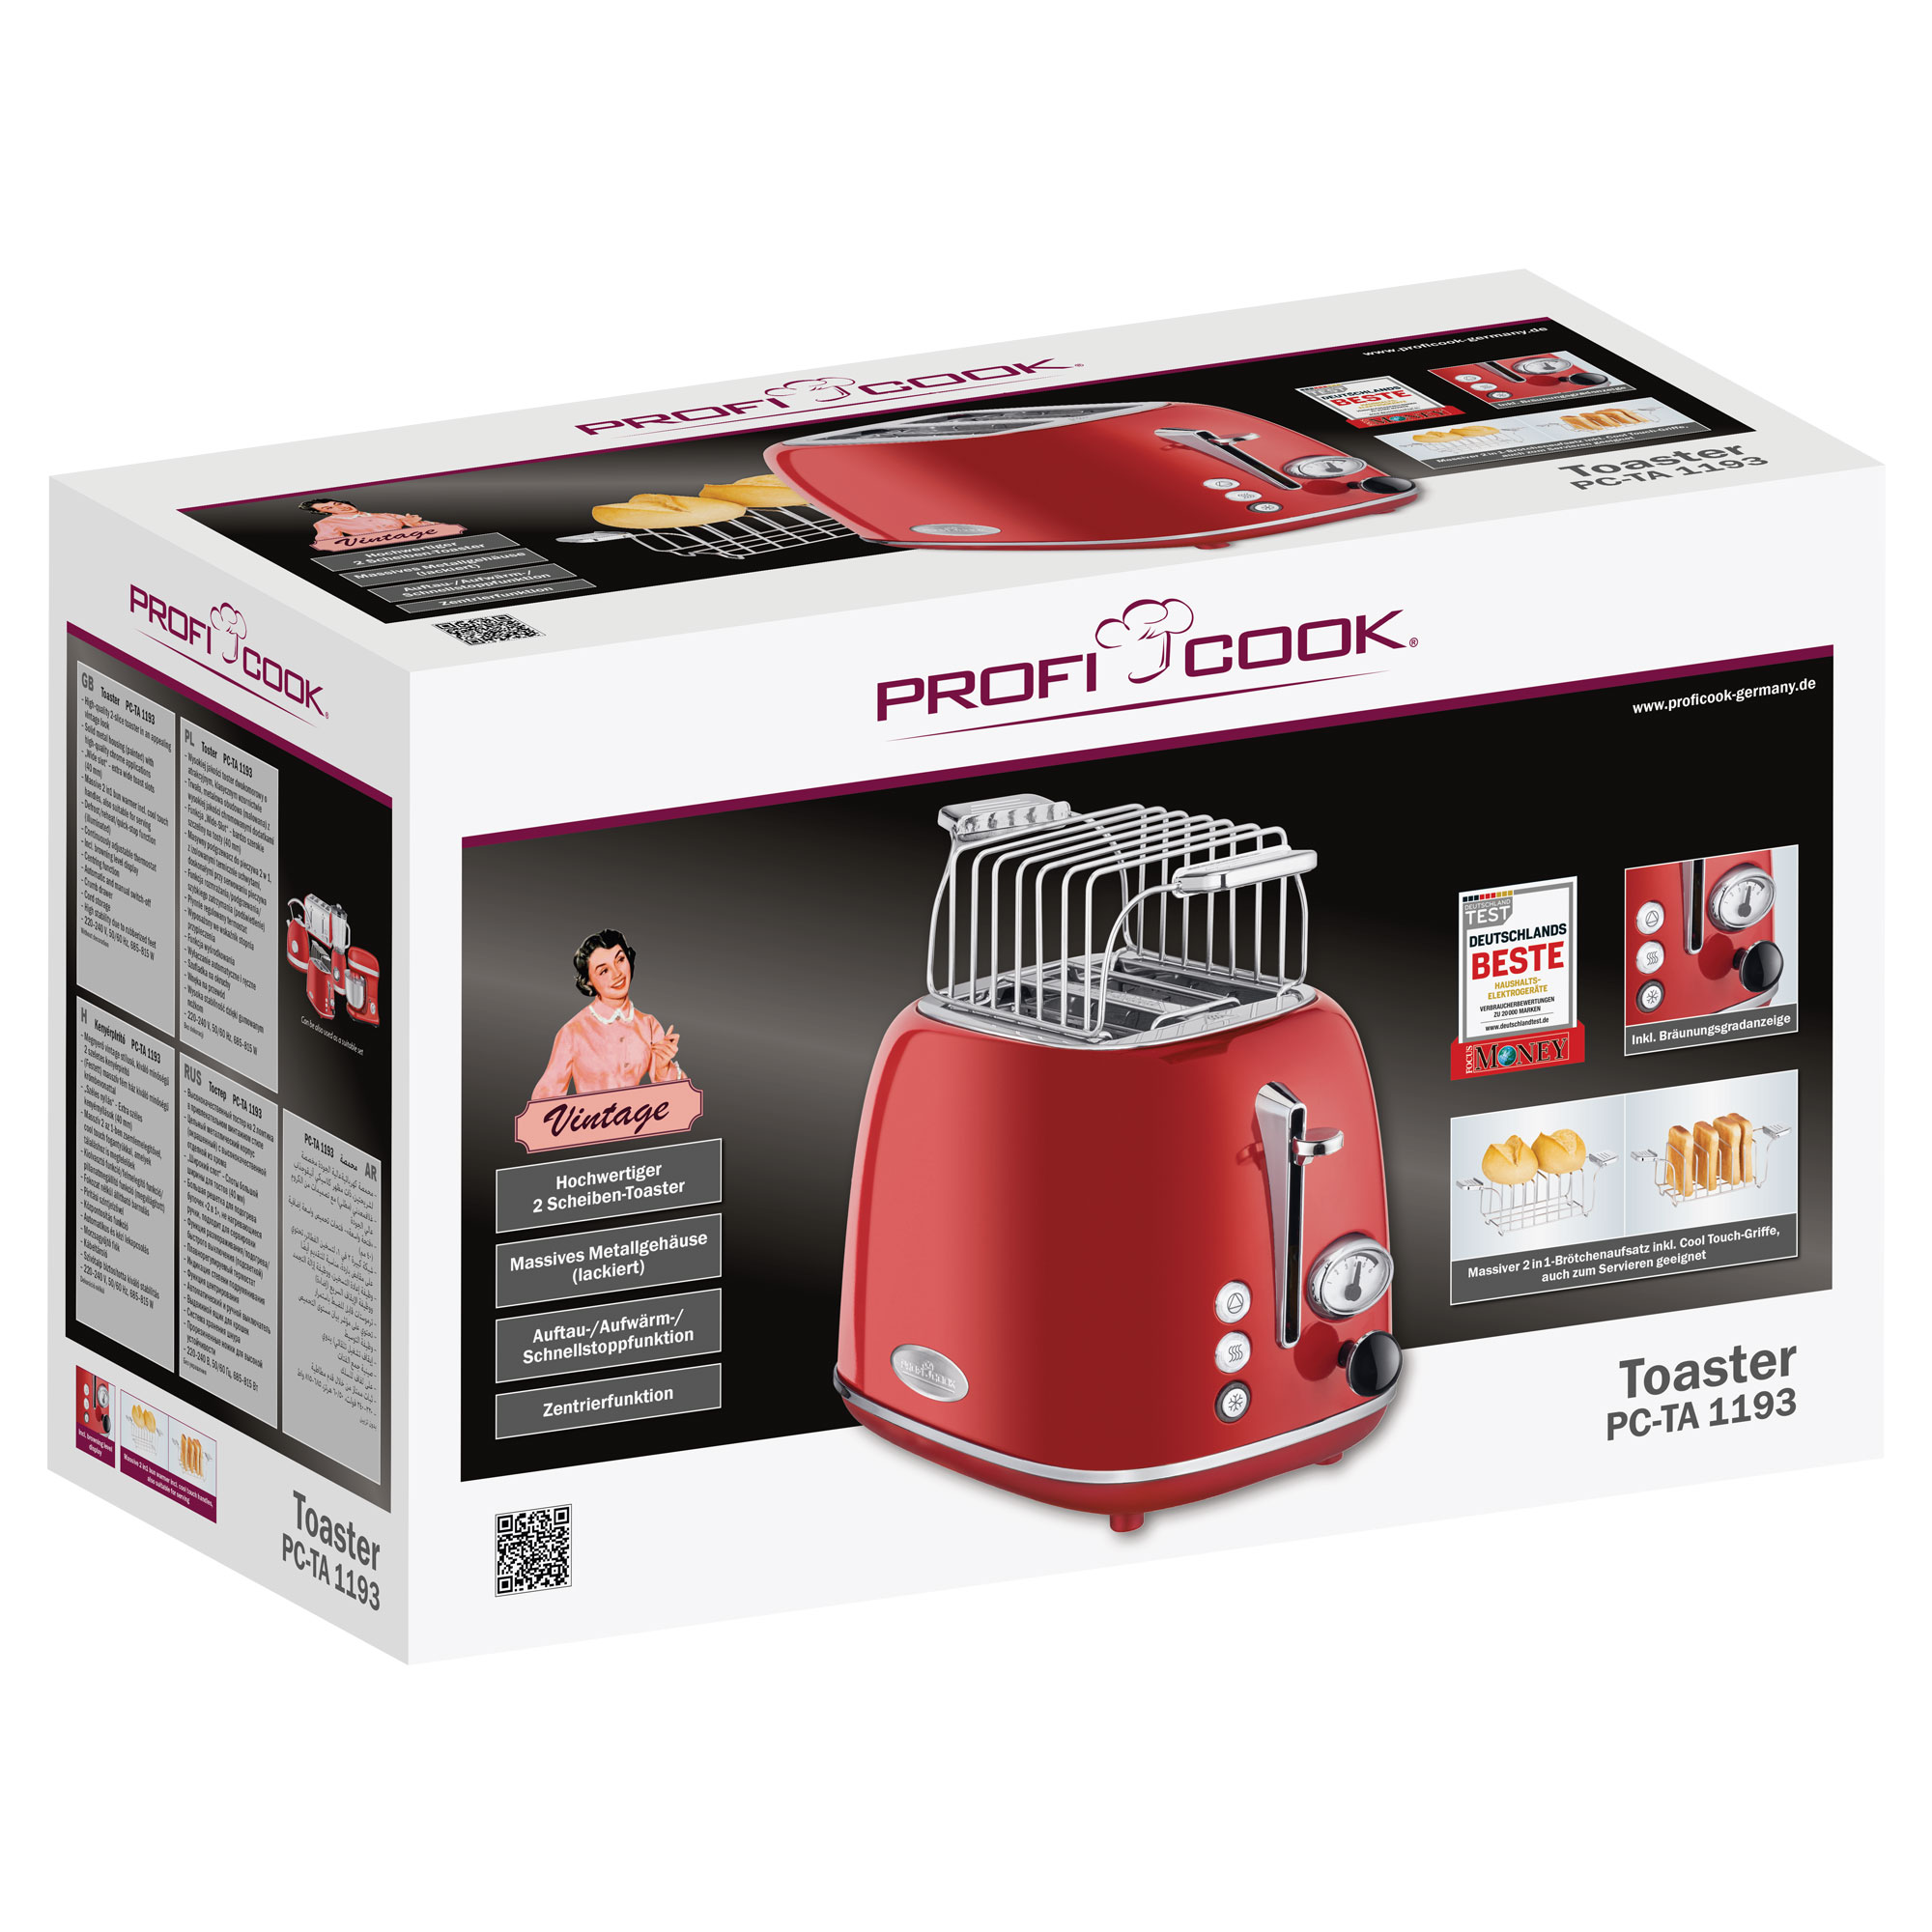 PROFICOOK PC-TA 1193 Toaster Rot Schlitze: 2) (815 Watt